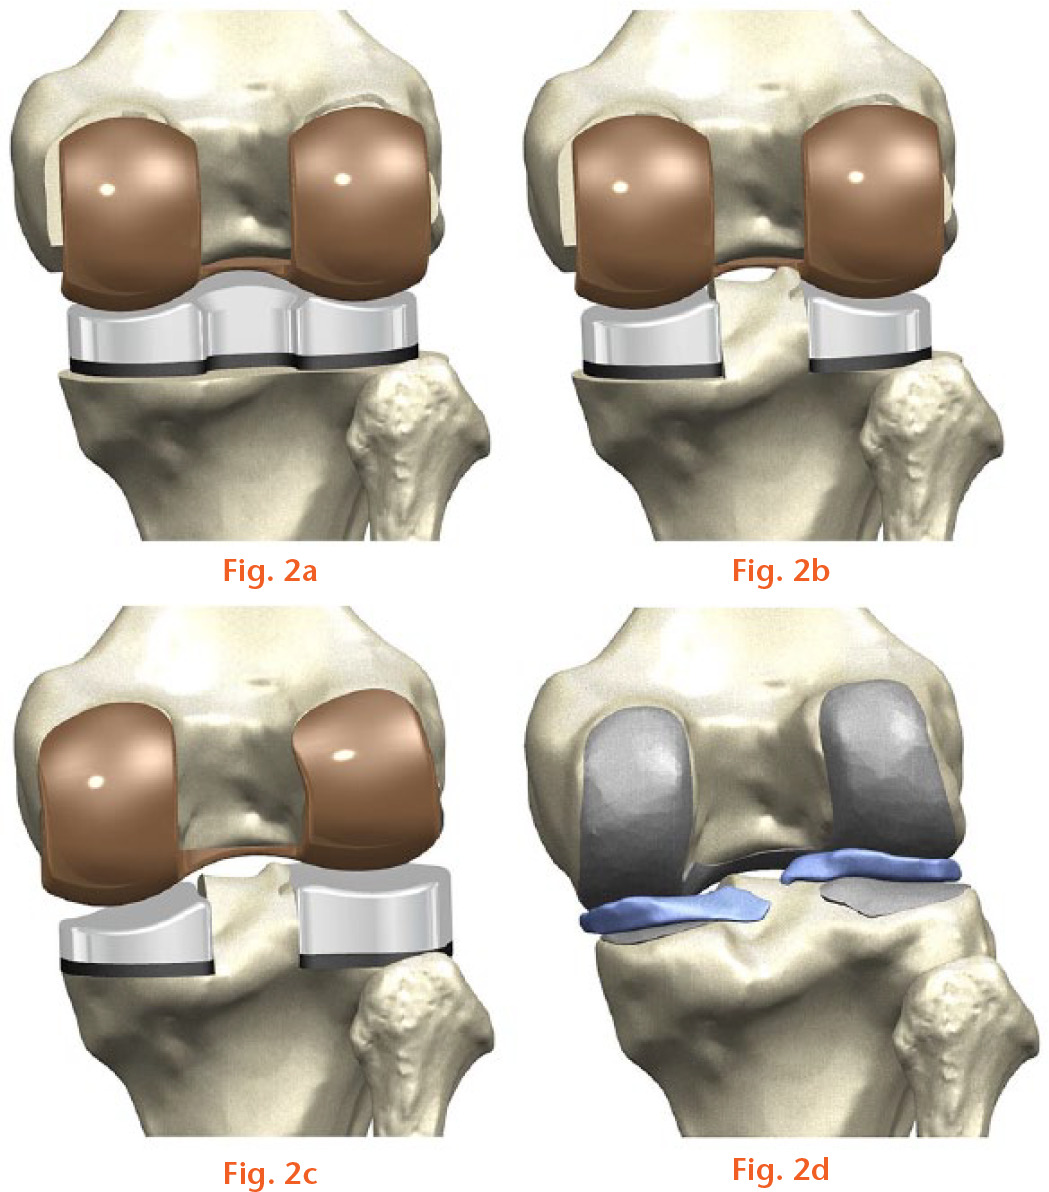  
            FEM used in analysis: a) standard off-the-shelf cruciate-retaining total knee arthroplasty (TKA); b) standard off-the-shelf bicruciate-retaining TKA; c) patient-specific bicruciate-retaining TKA; d) normal adult knee.
          